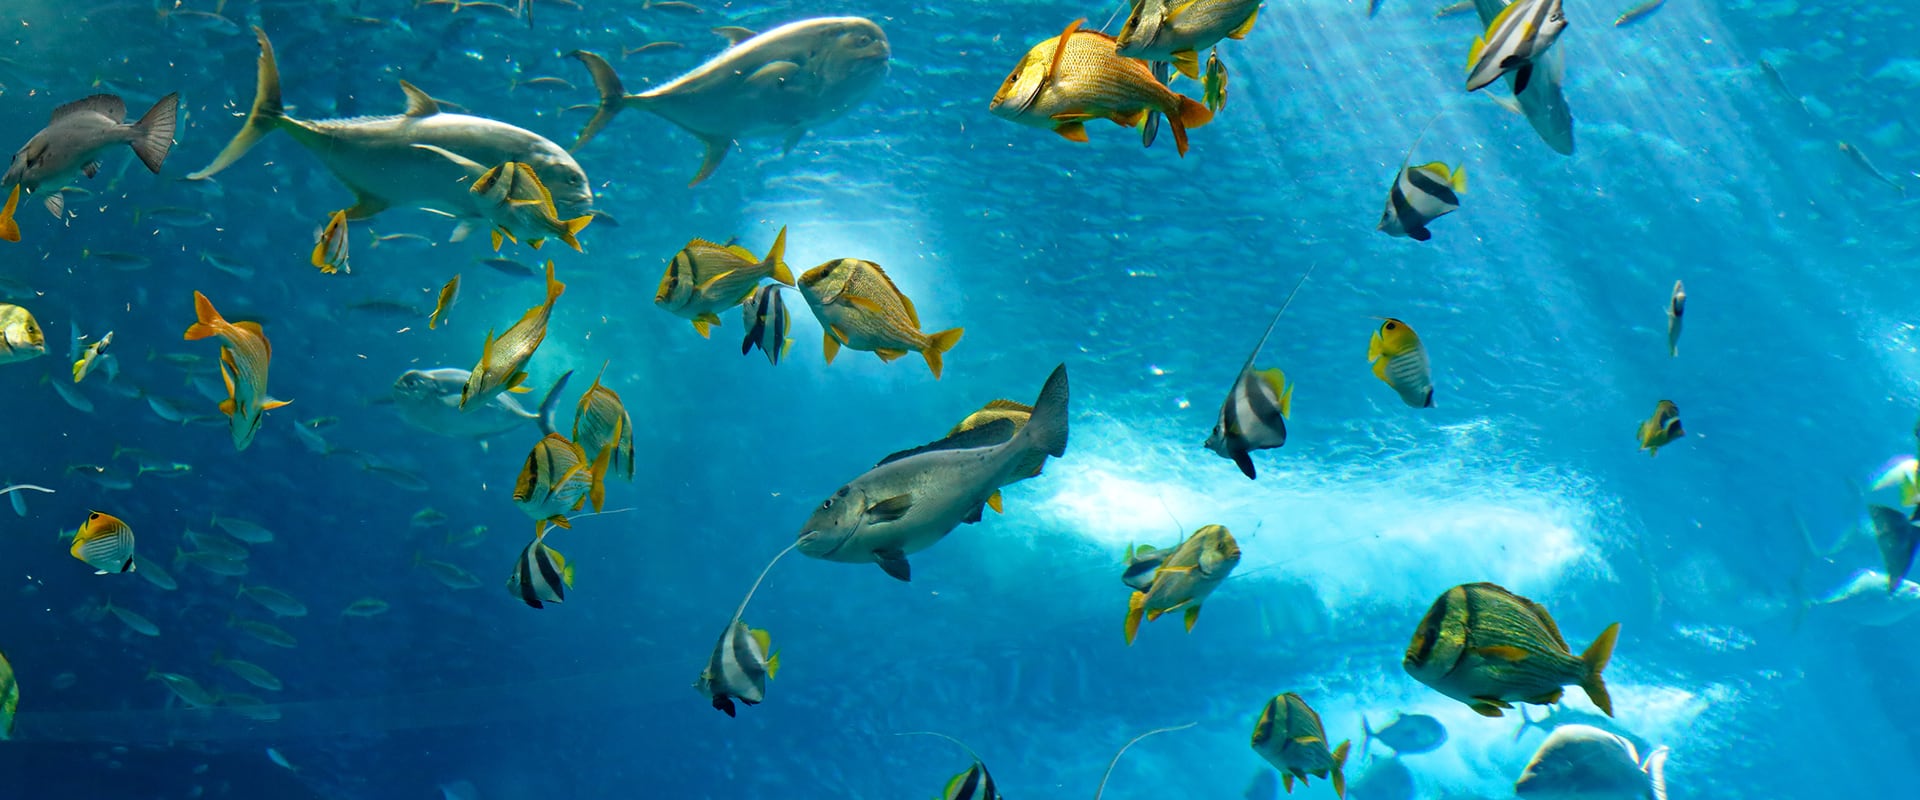 2 Crociere subacquee in Cuba - LiveAboard.com